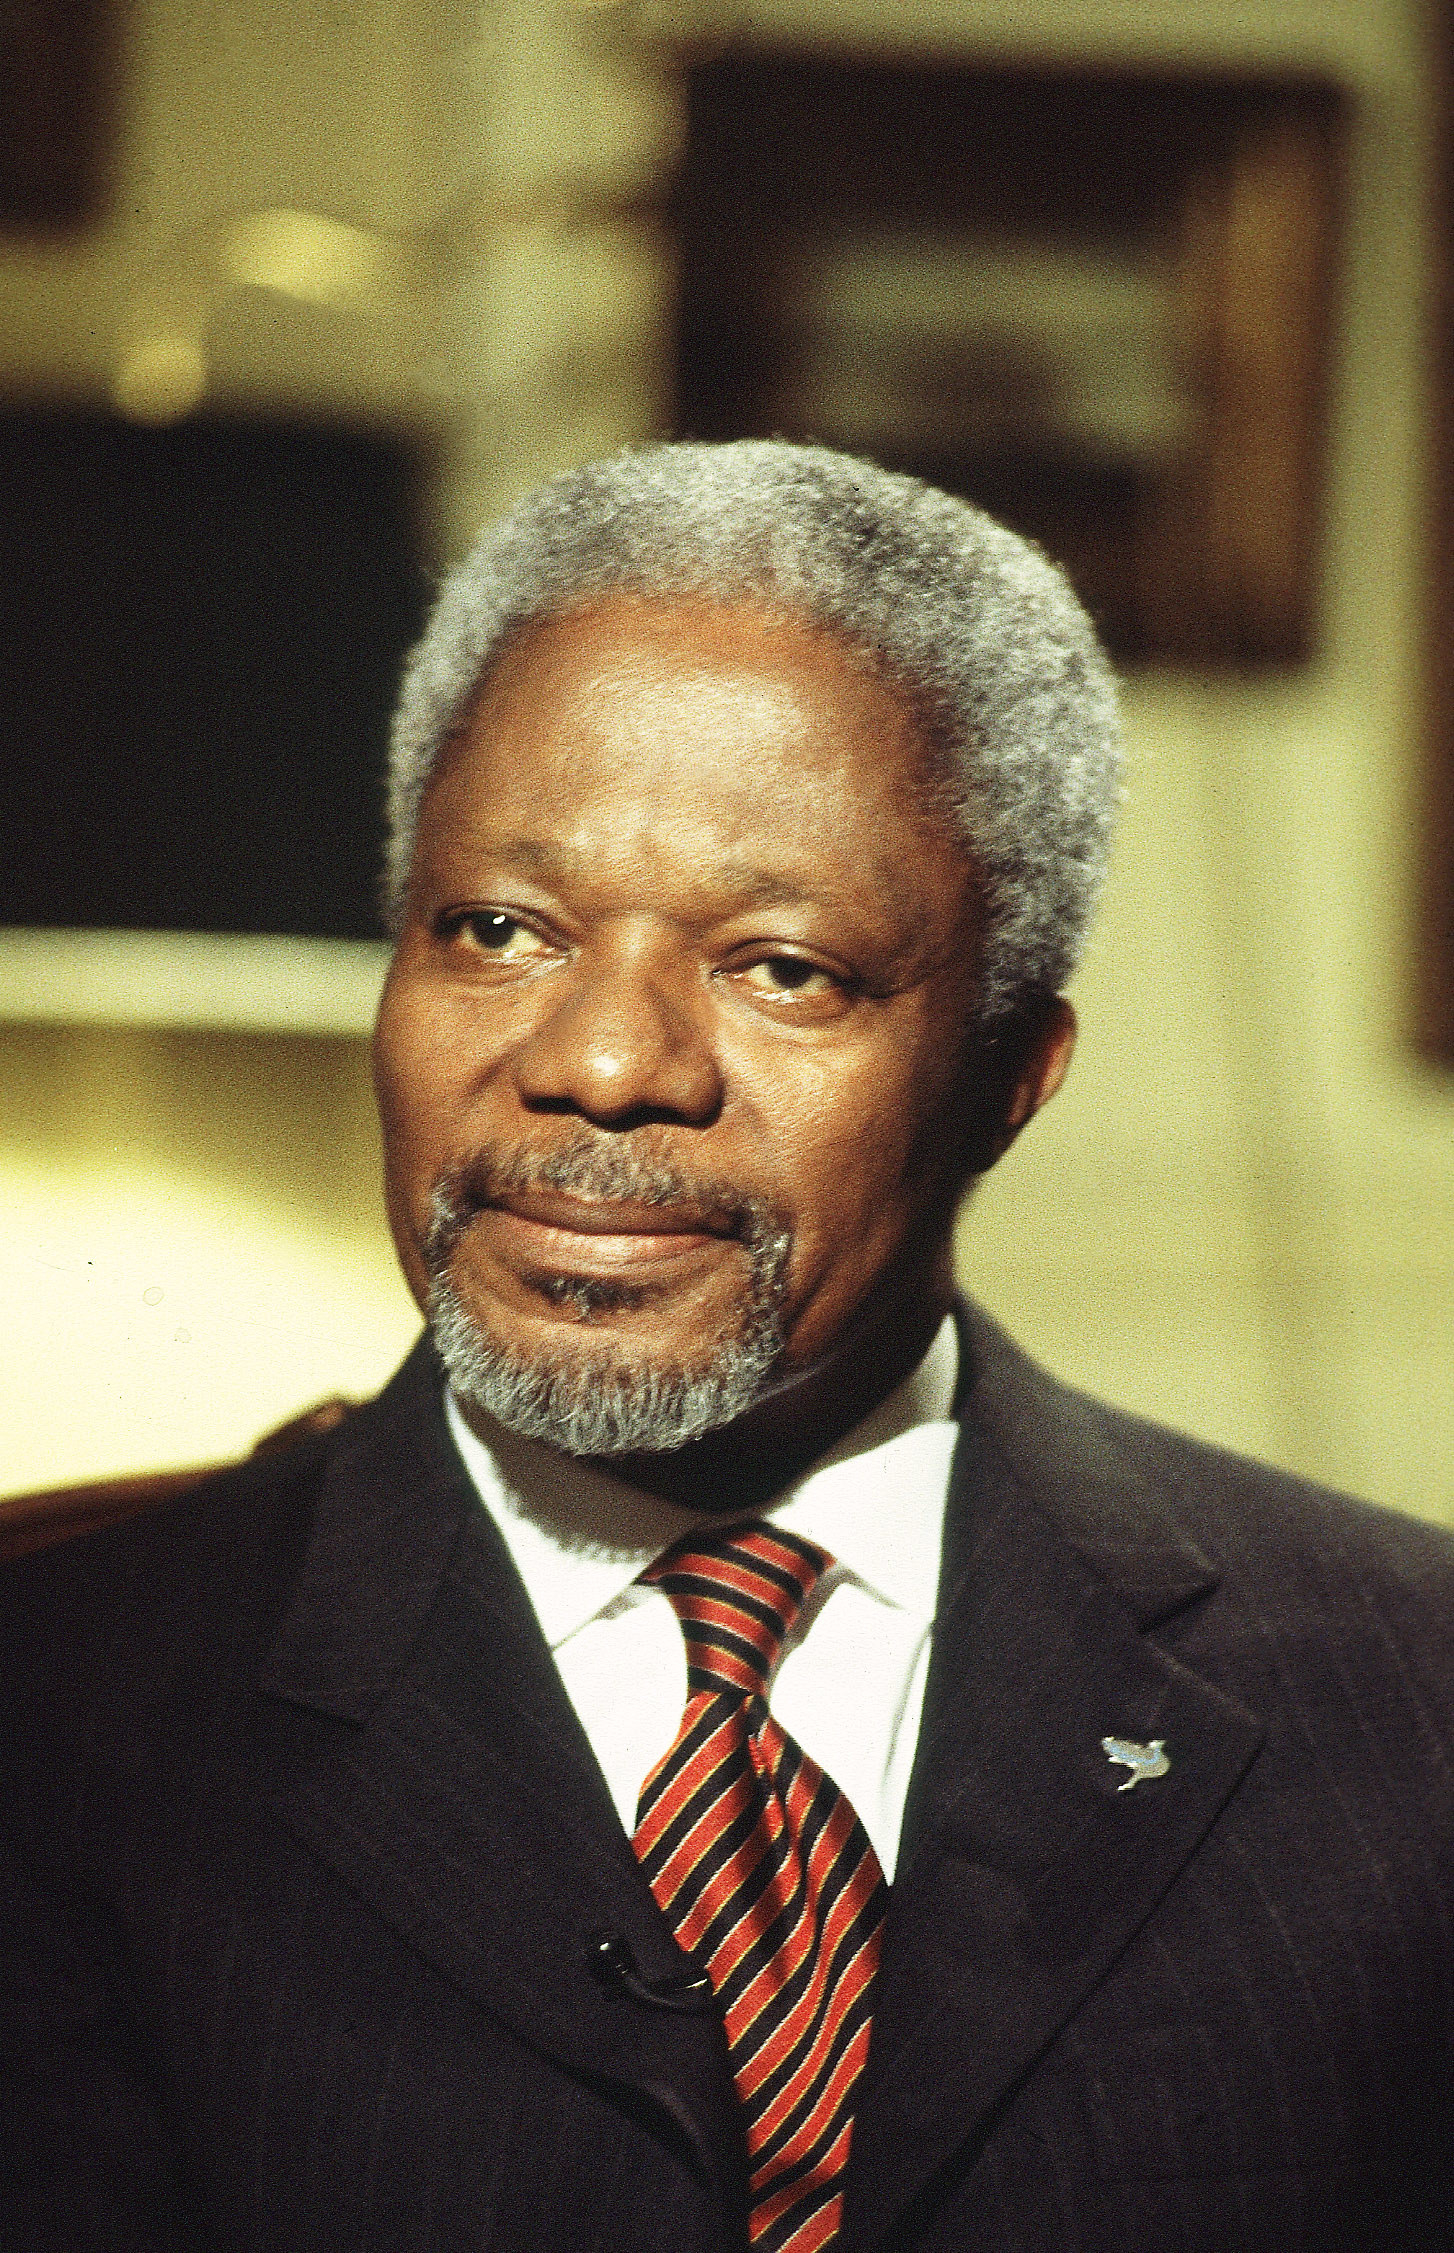 Kofi Annan poses